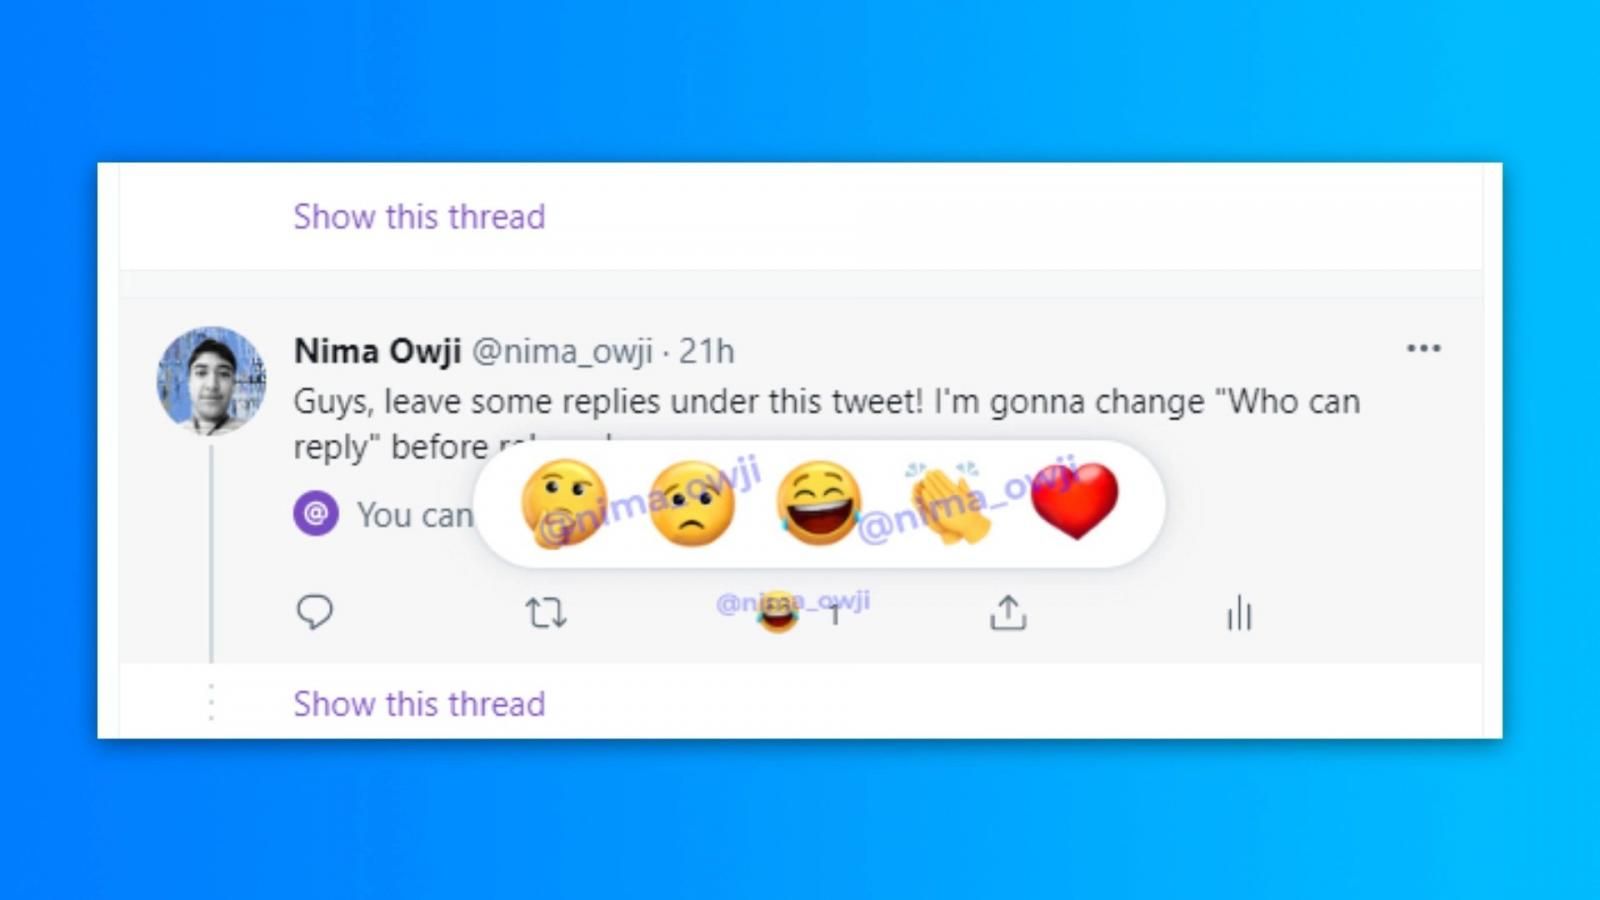 emoji reactions on Twitter